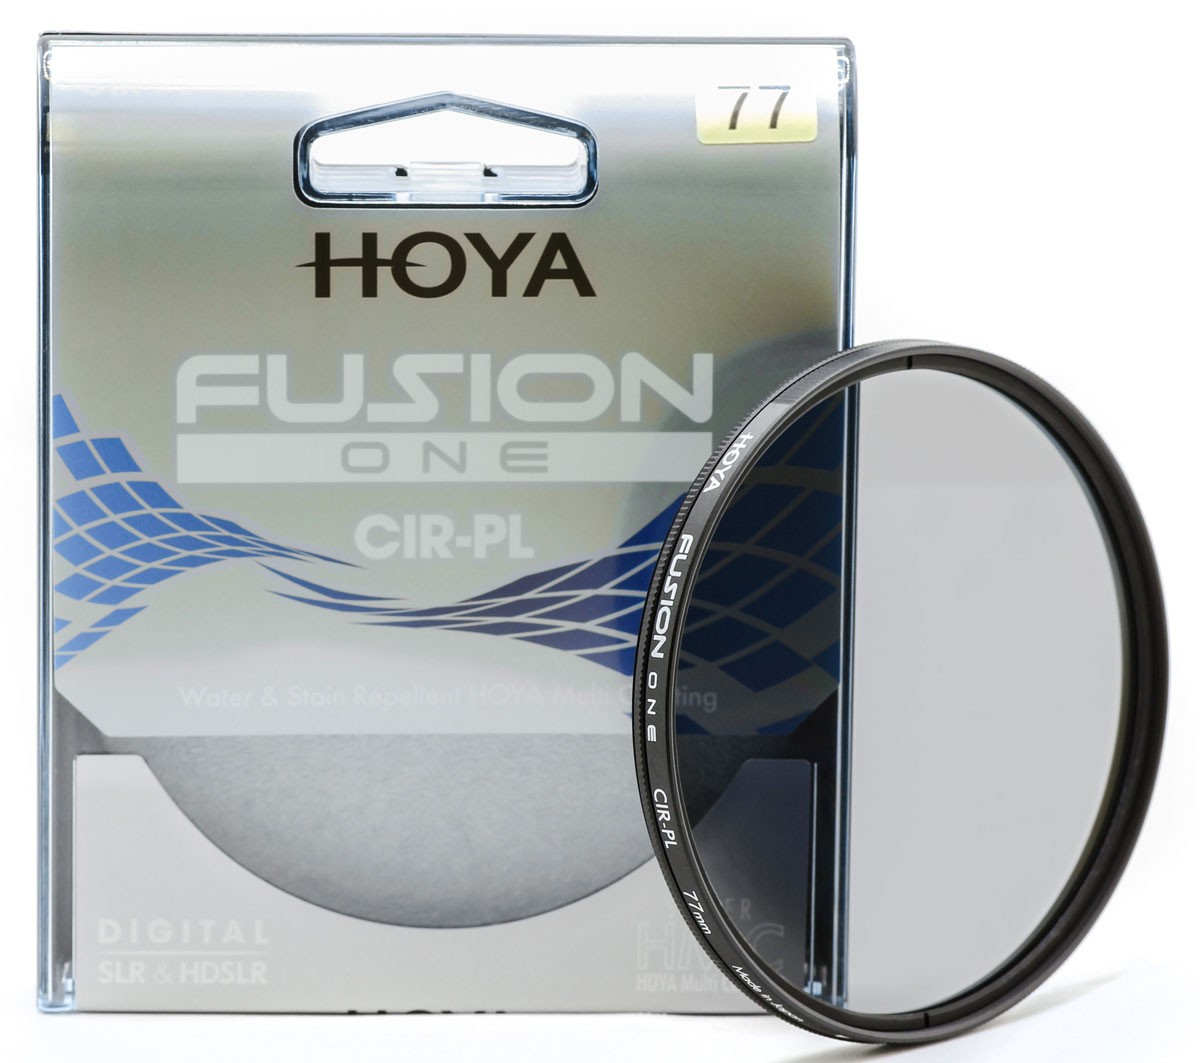 Hoya fusion one cpl